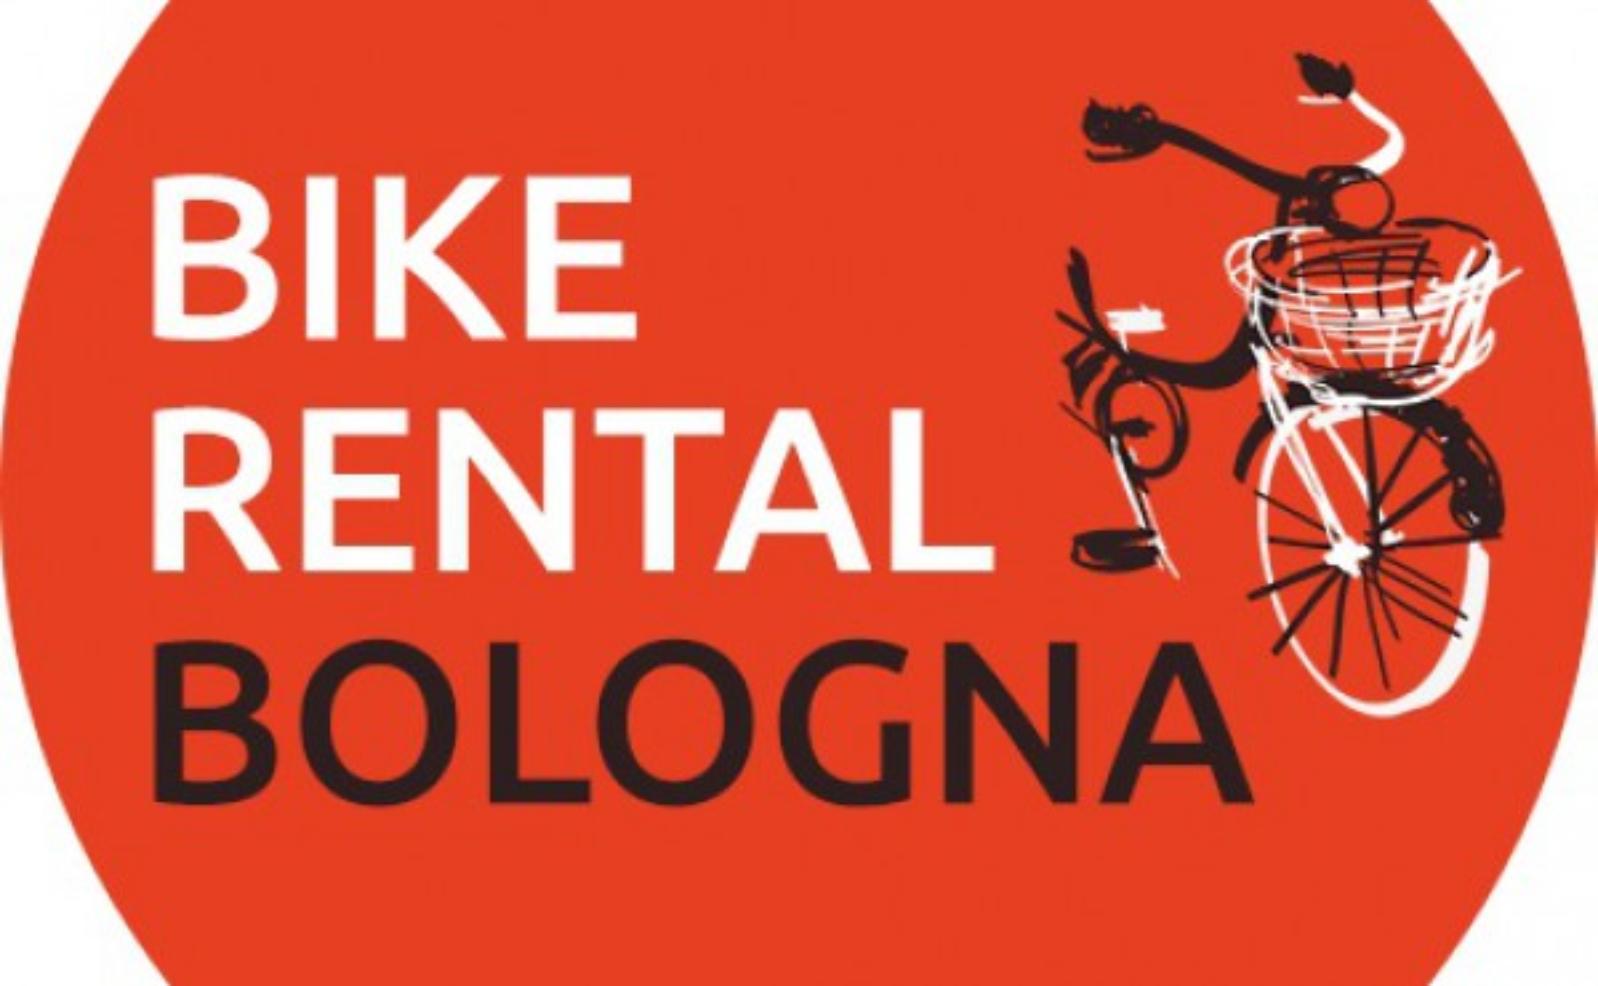 Bike rental : Bike Rental Bologna